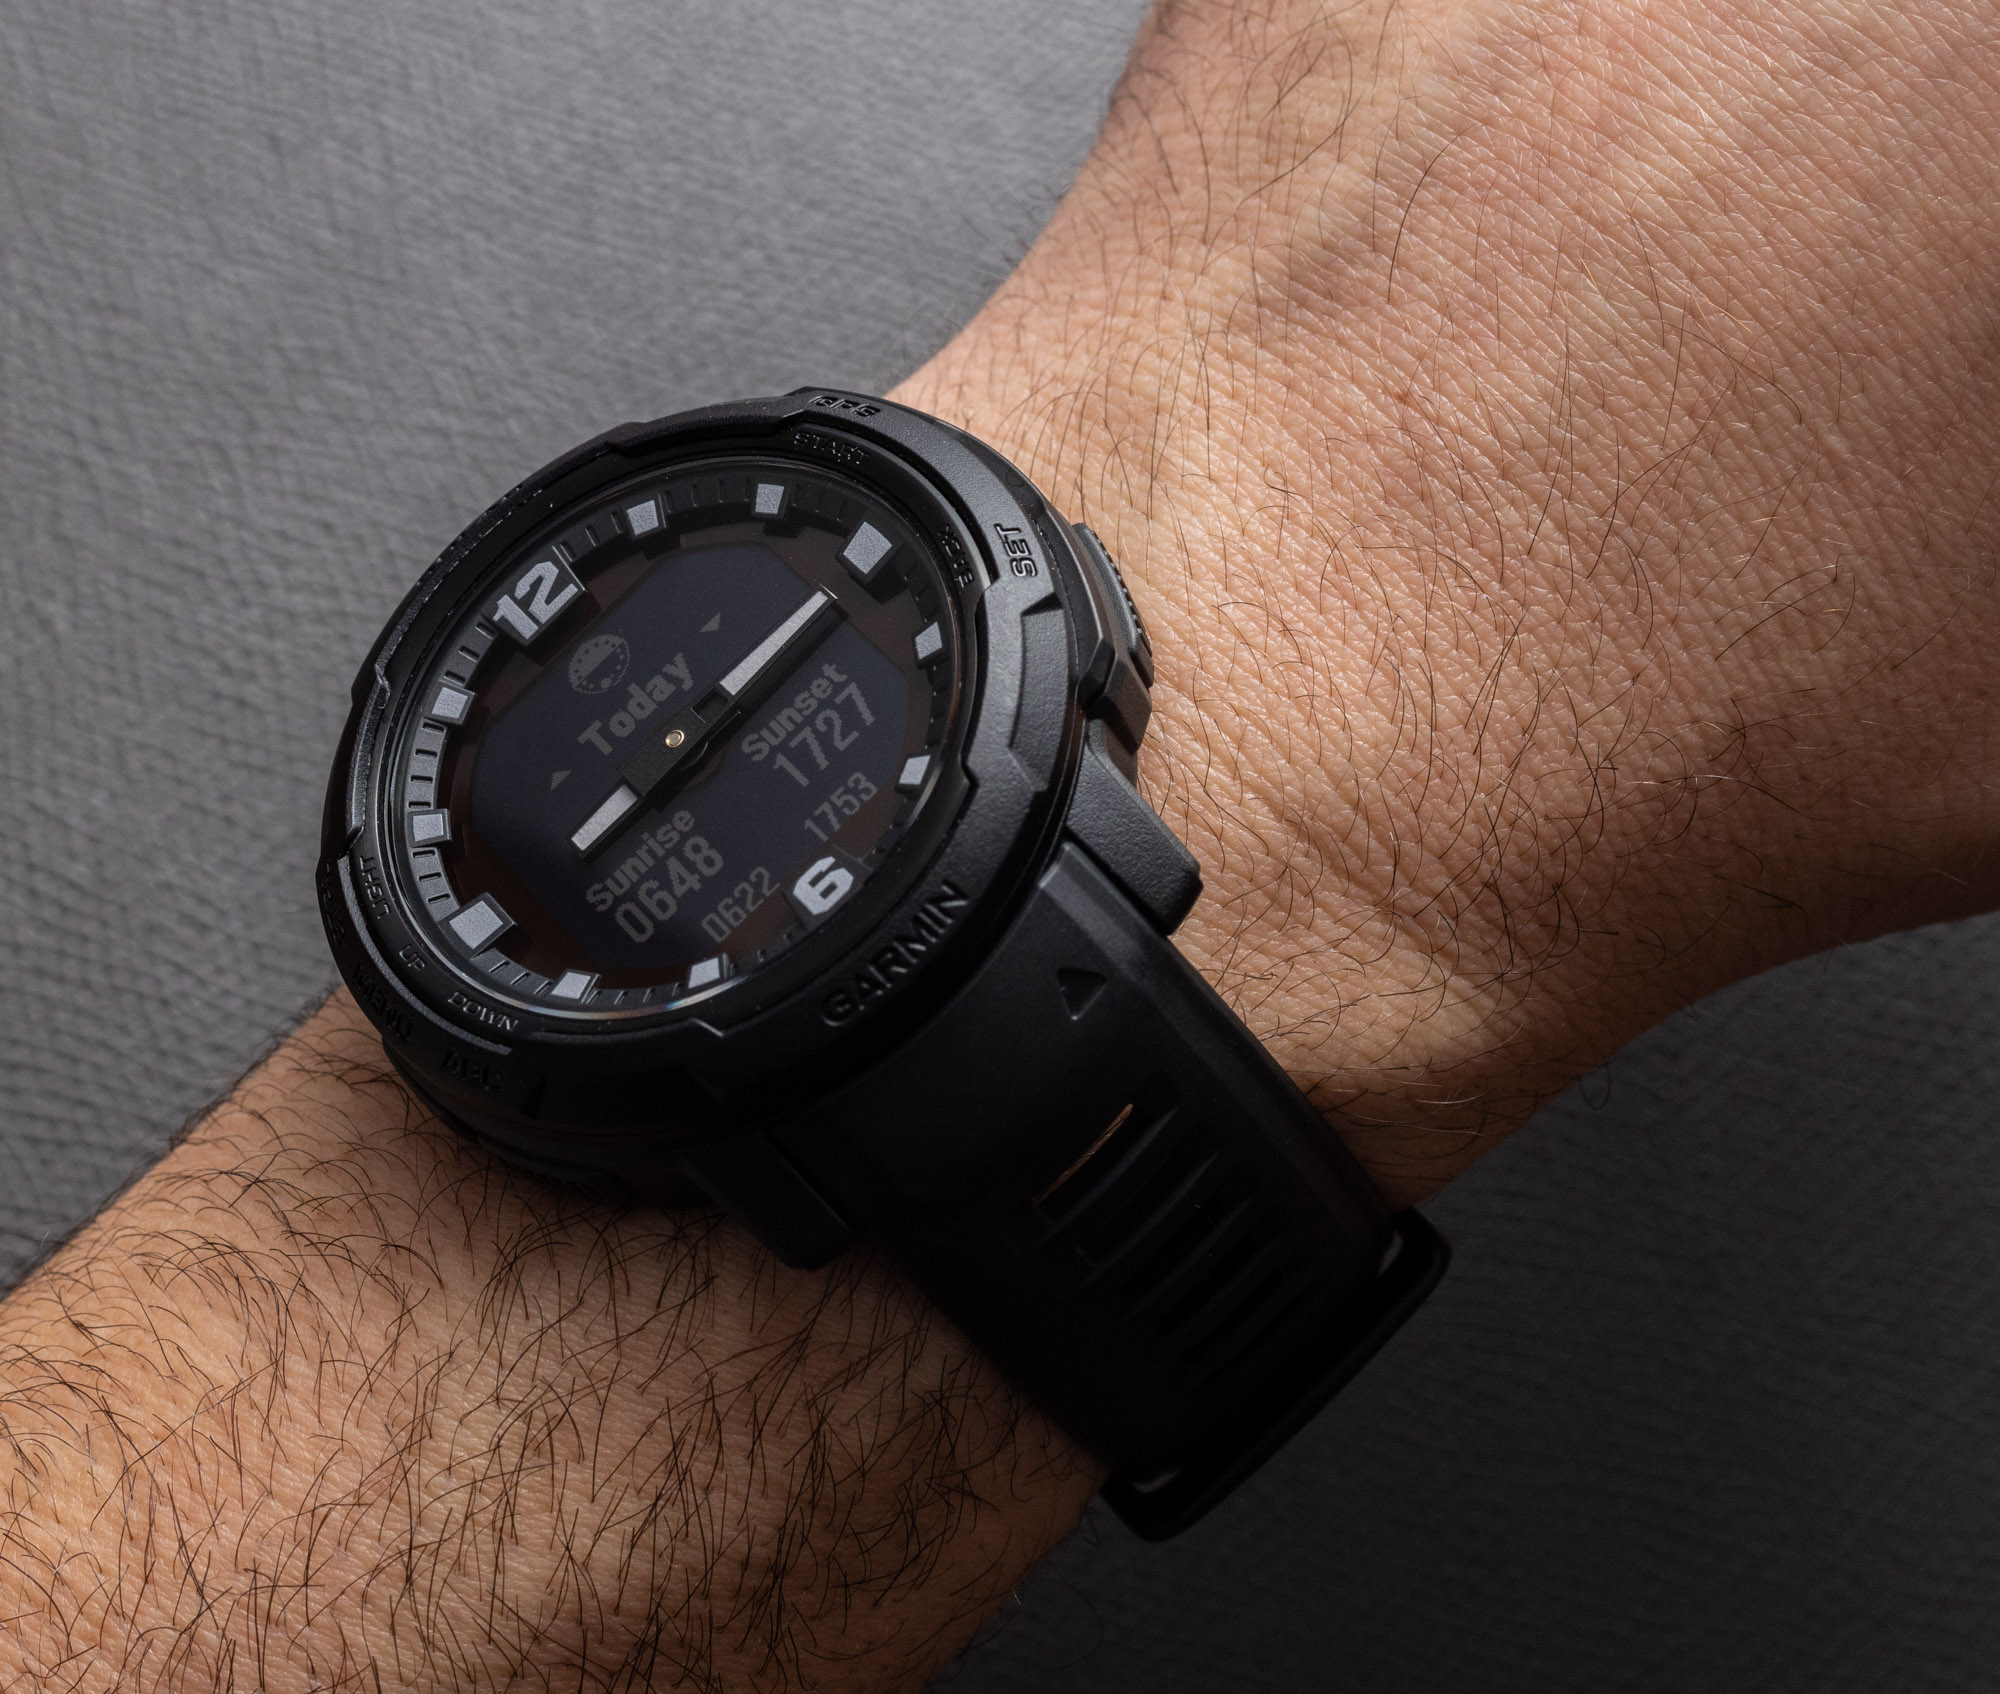 Garmin announces Instinct Crossover hybrid smartwatches